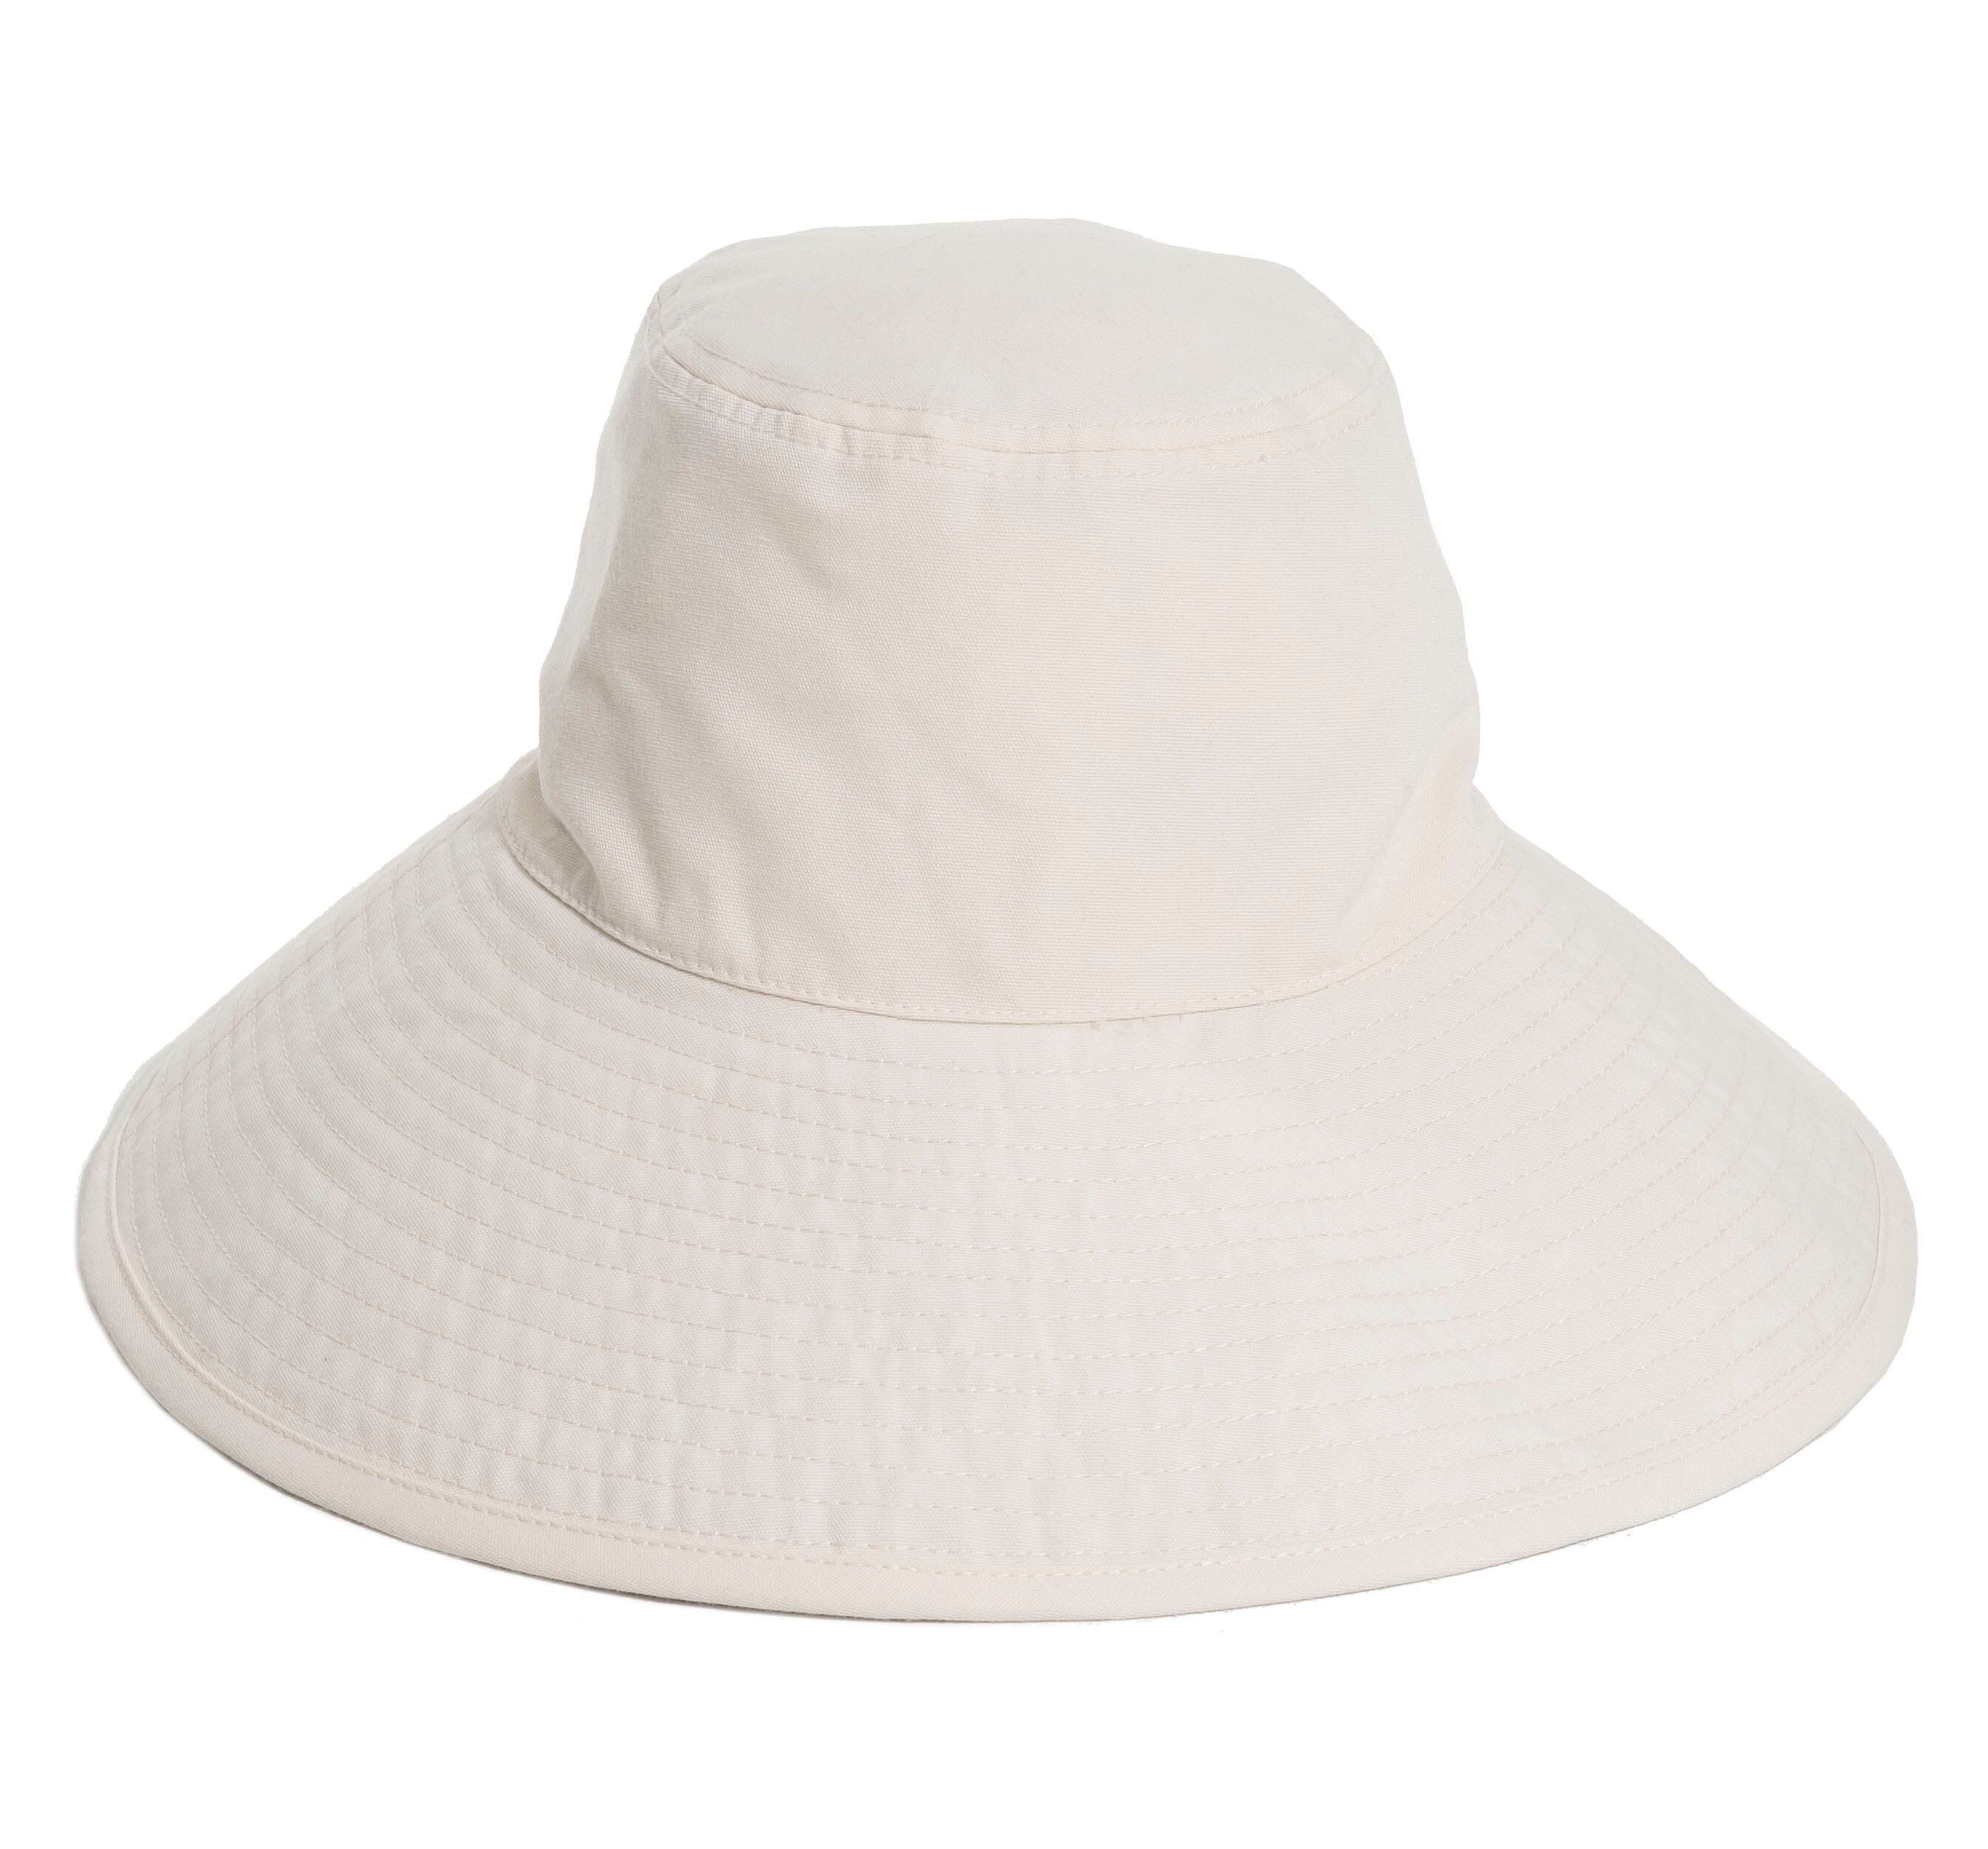 The Wide Brim Hat - Antique White